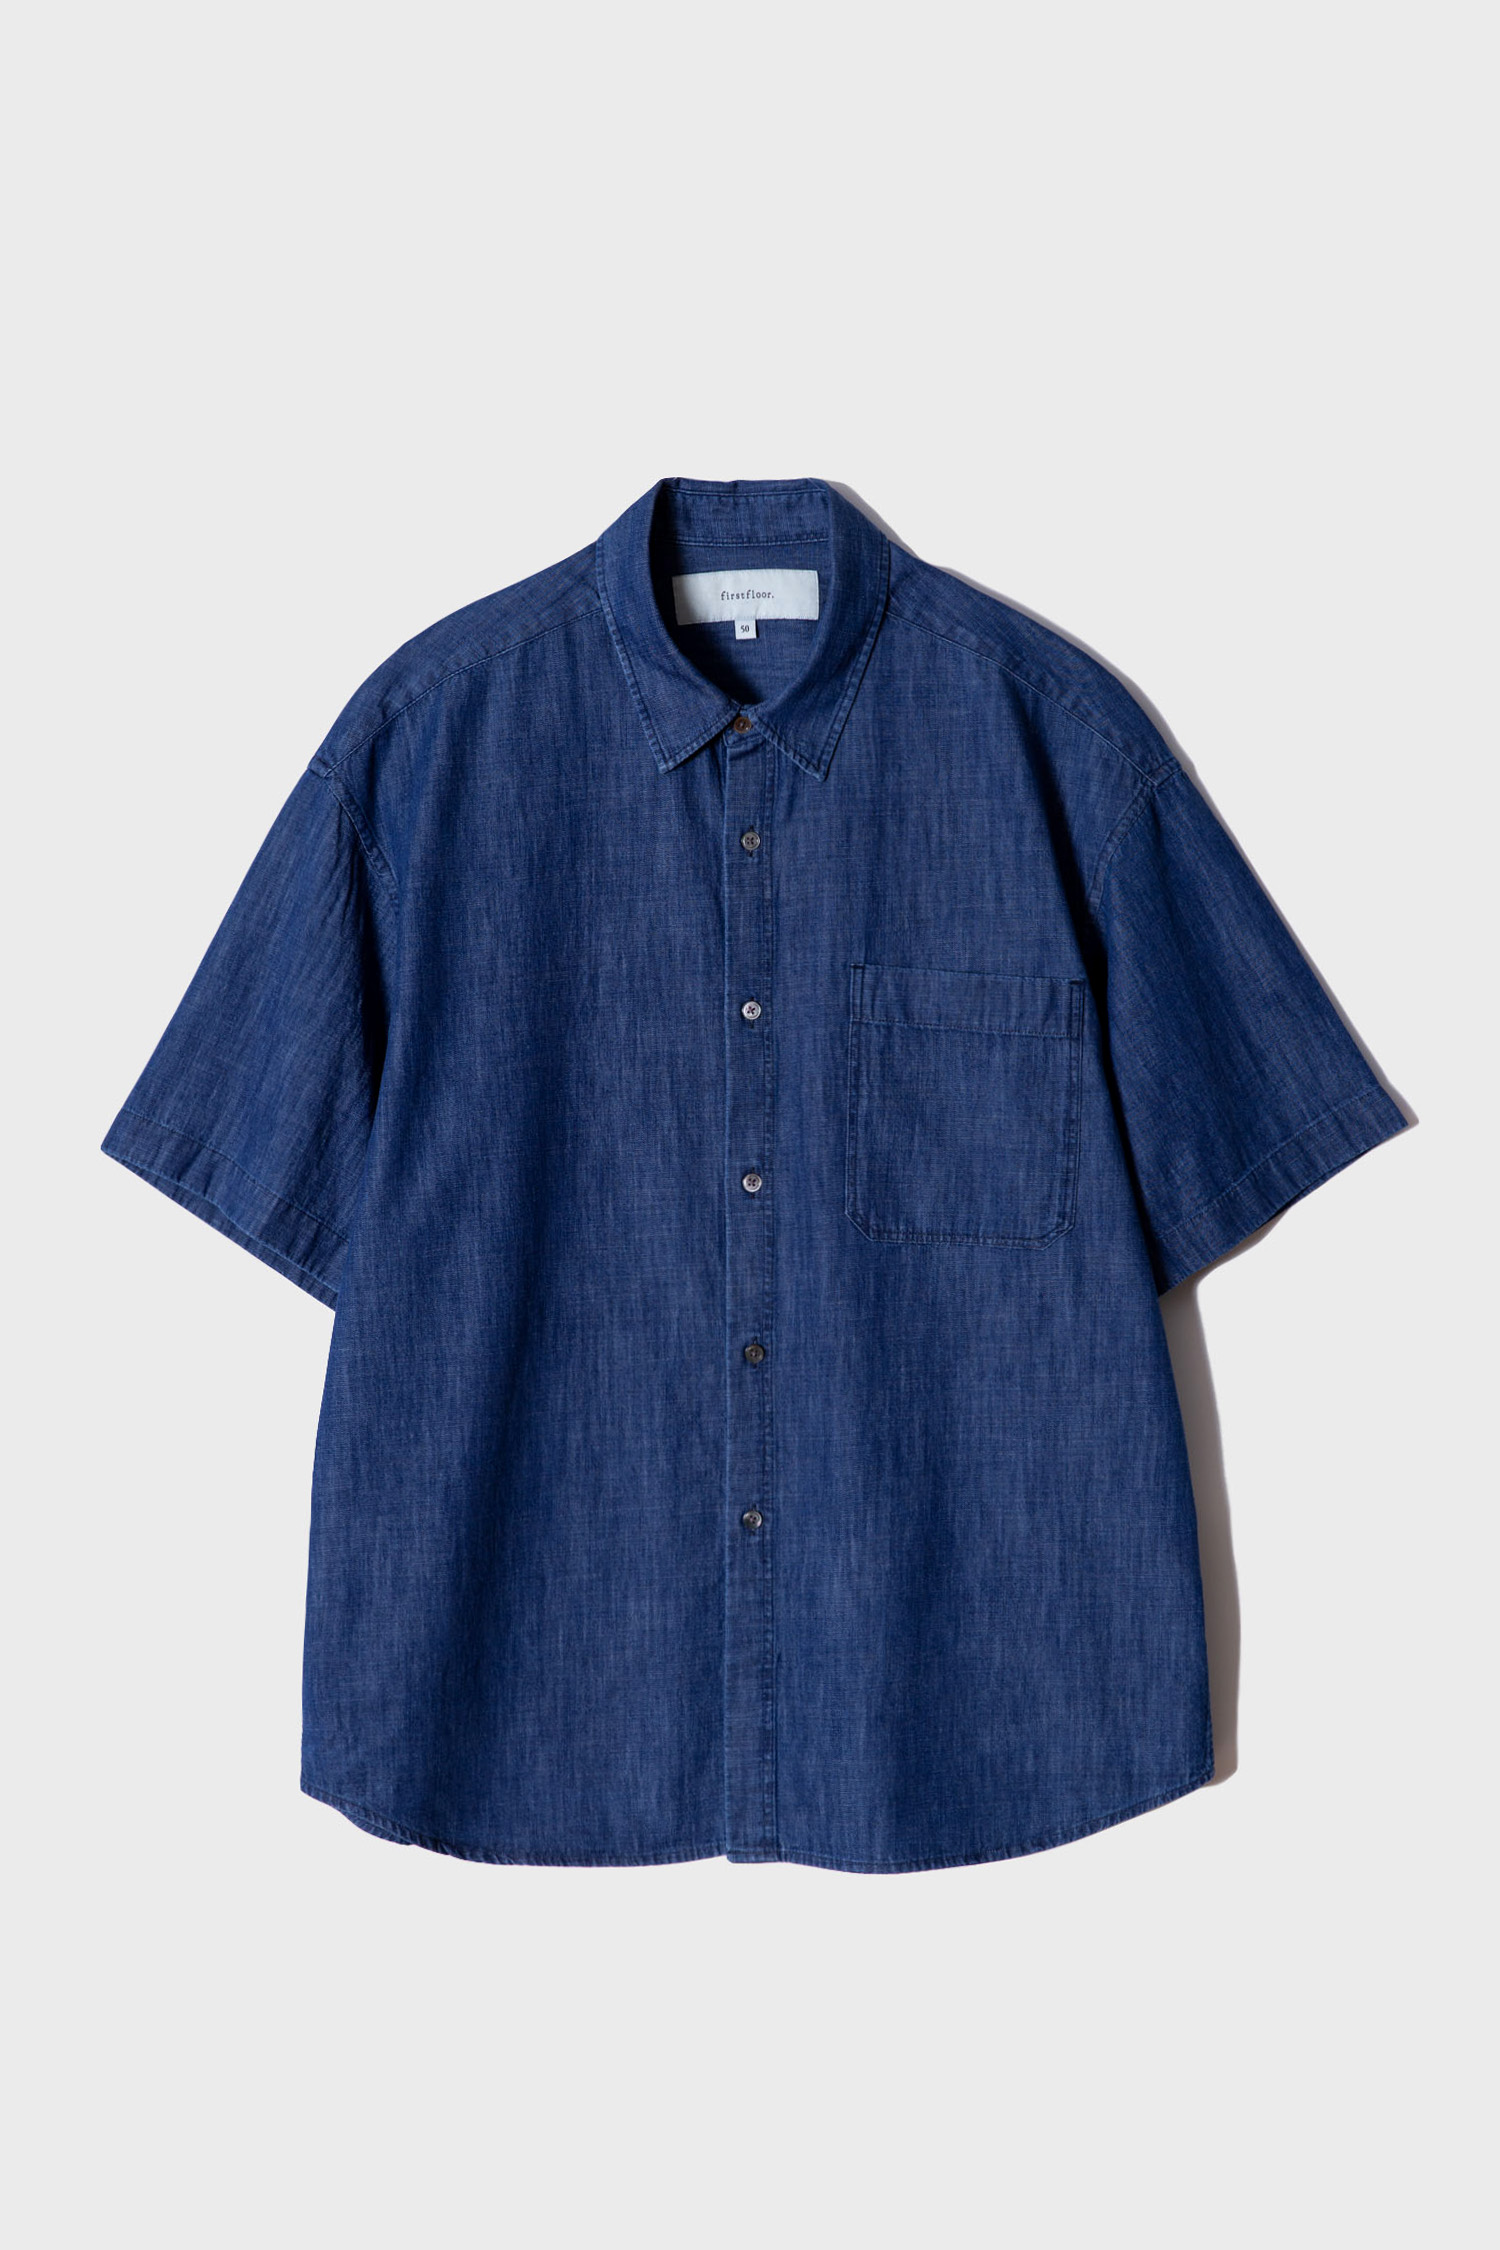 Denim summer shirt (2 colors, japan KUROKI)